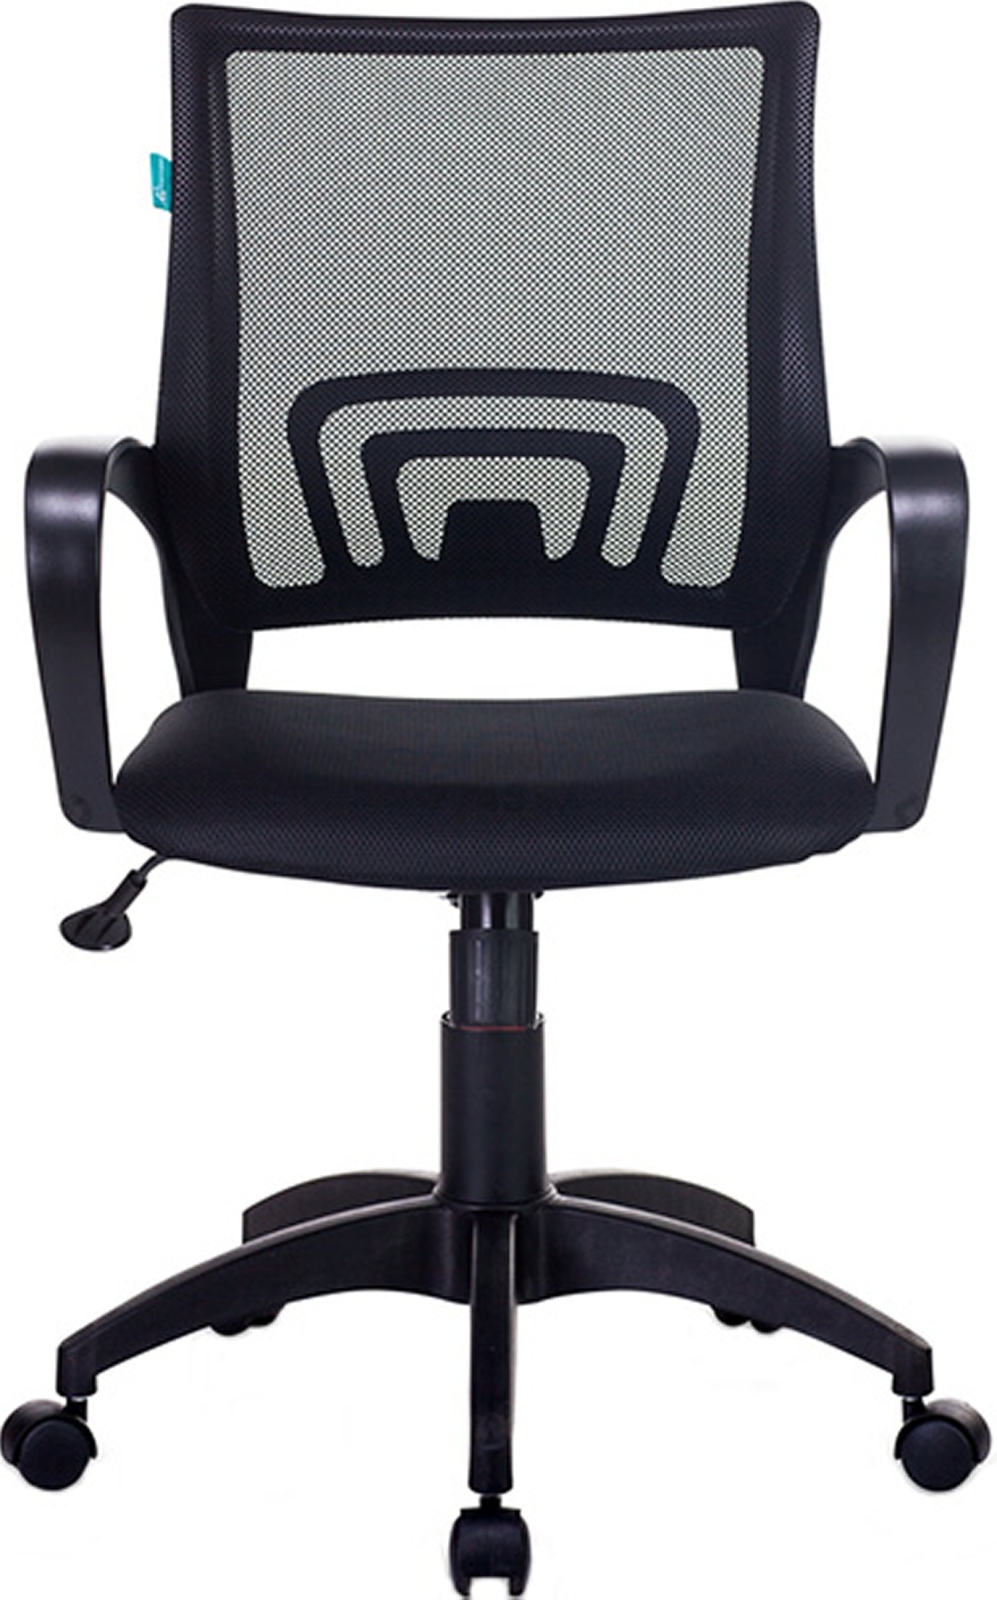 Кресло компьютерное KING STYLE KE-695N/BLACK черный TW-01 TW-11 сетка/ткань - Фото 2